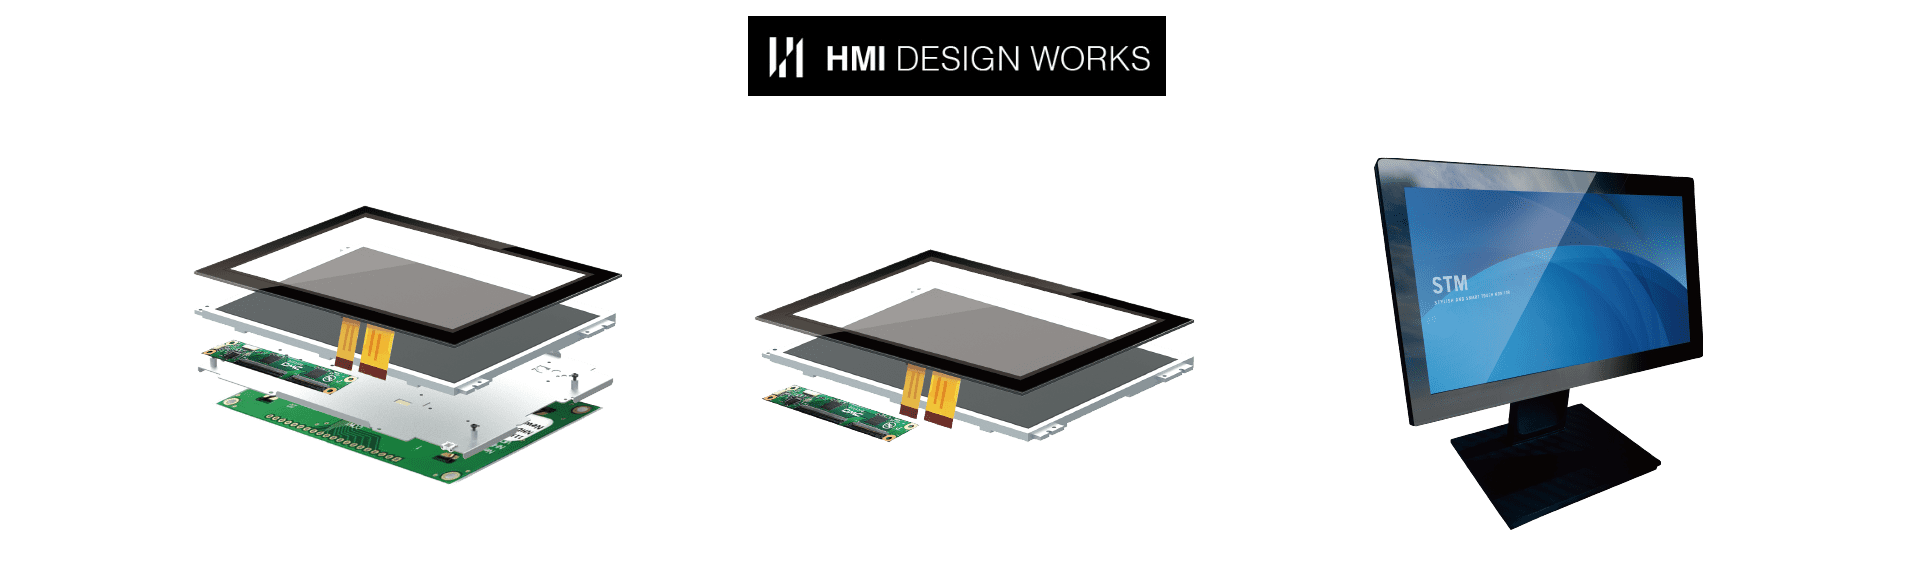 HMI DESIGN WORKSイメージ1